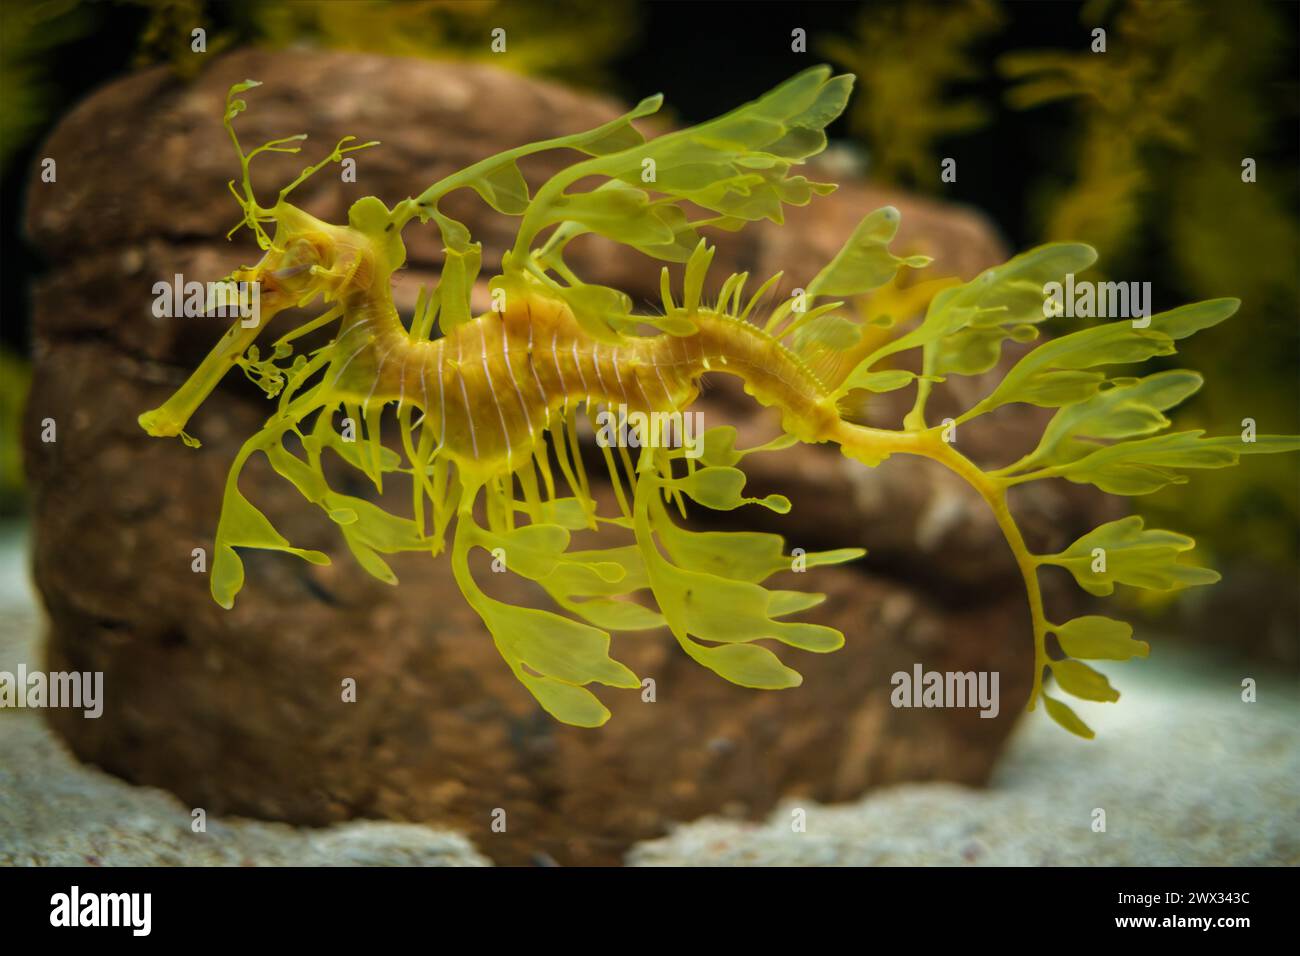 Leafy Seadragon Phycodurus eques fish underwater Stock Photo